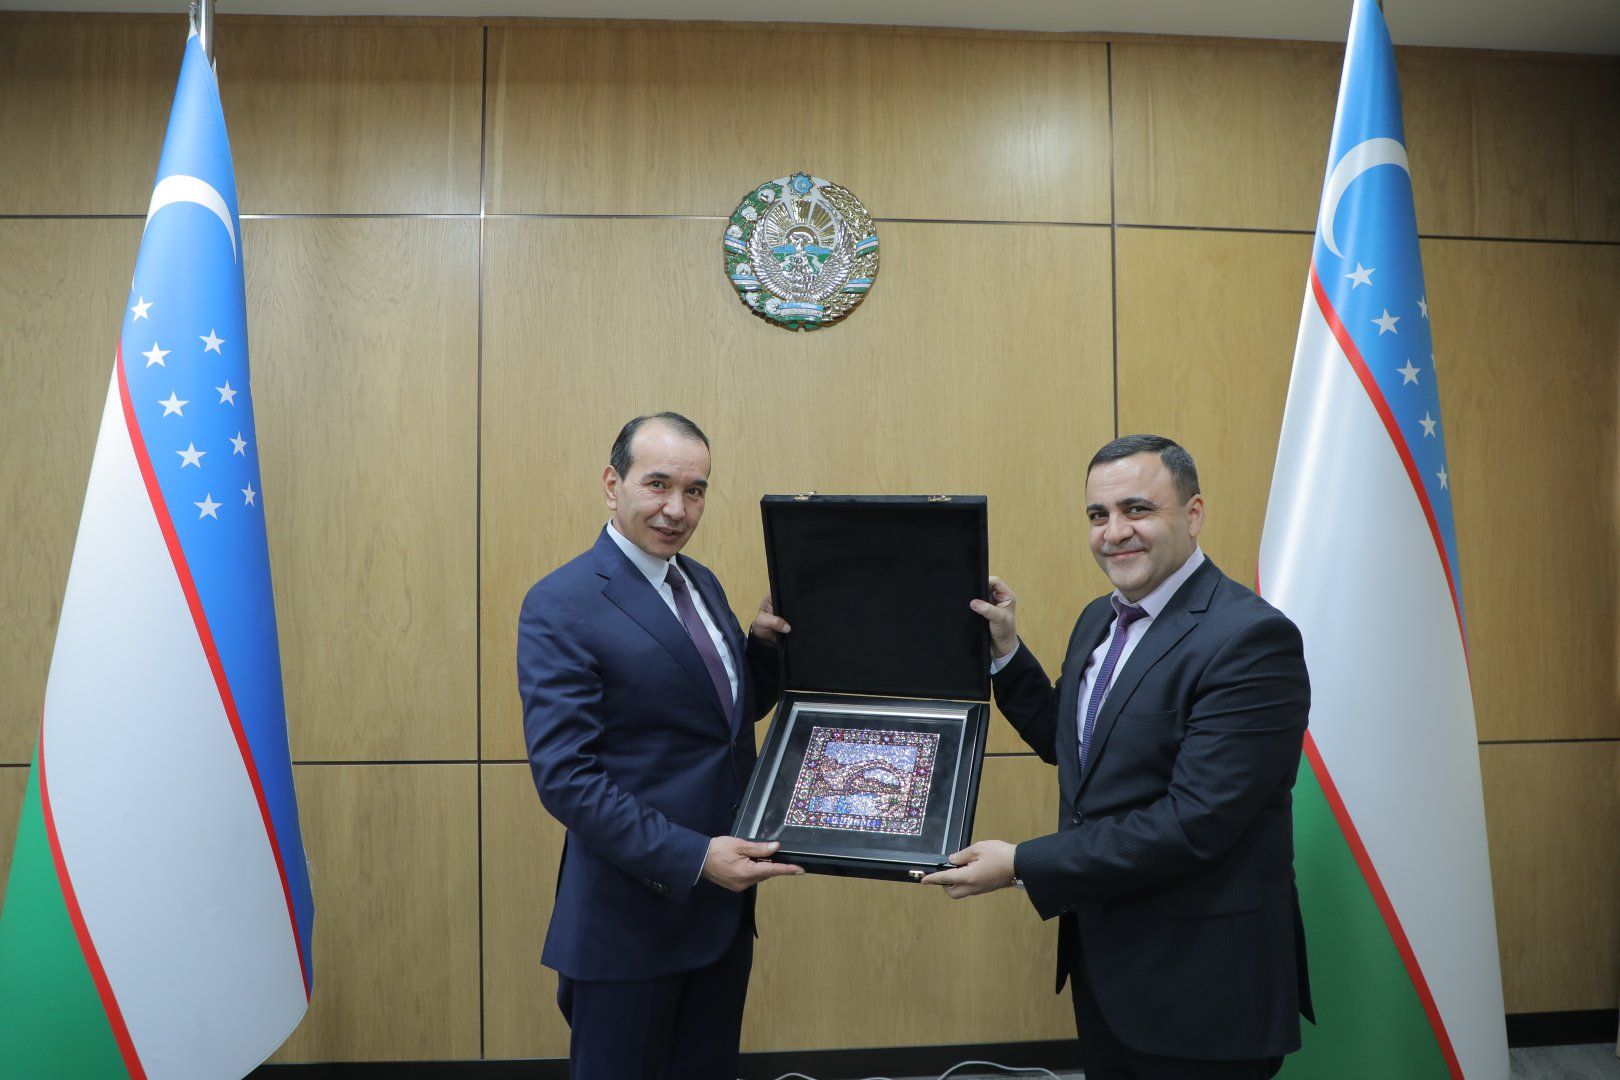 Uzbekistan Culture Minister hails cultural ties with Azerbaijan [PHOTOS]